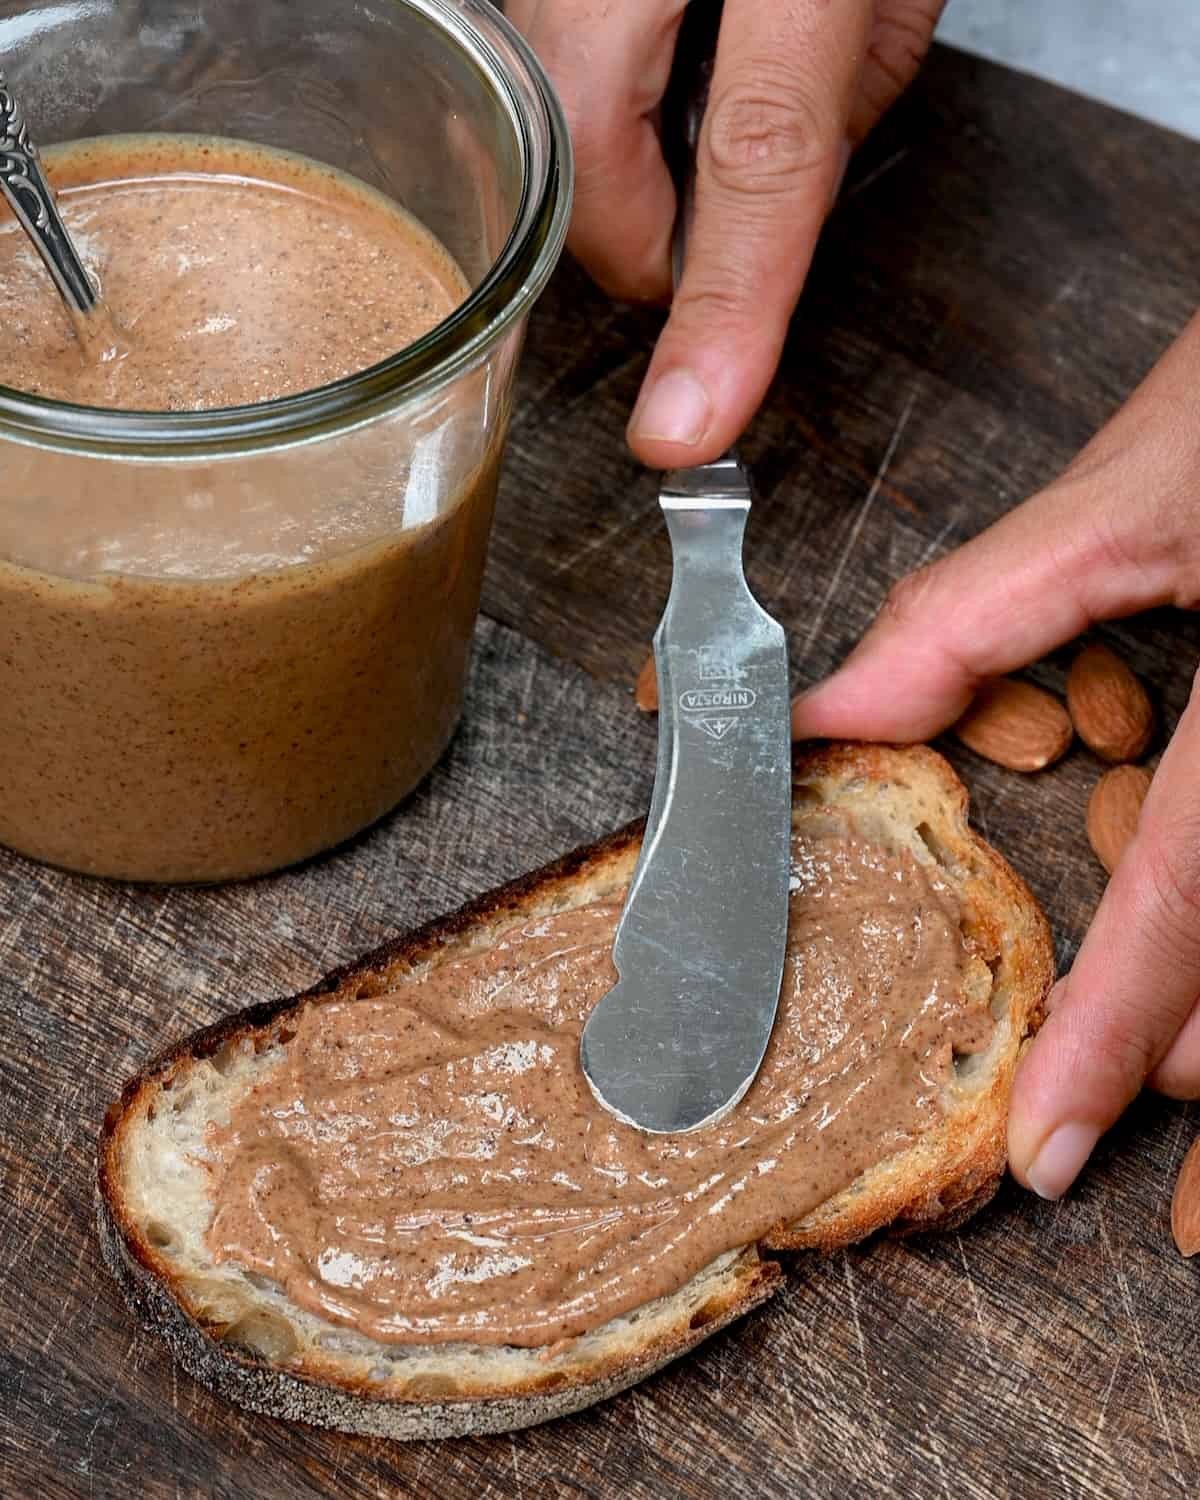 Spreading almond butter on toast